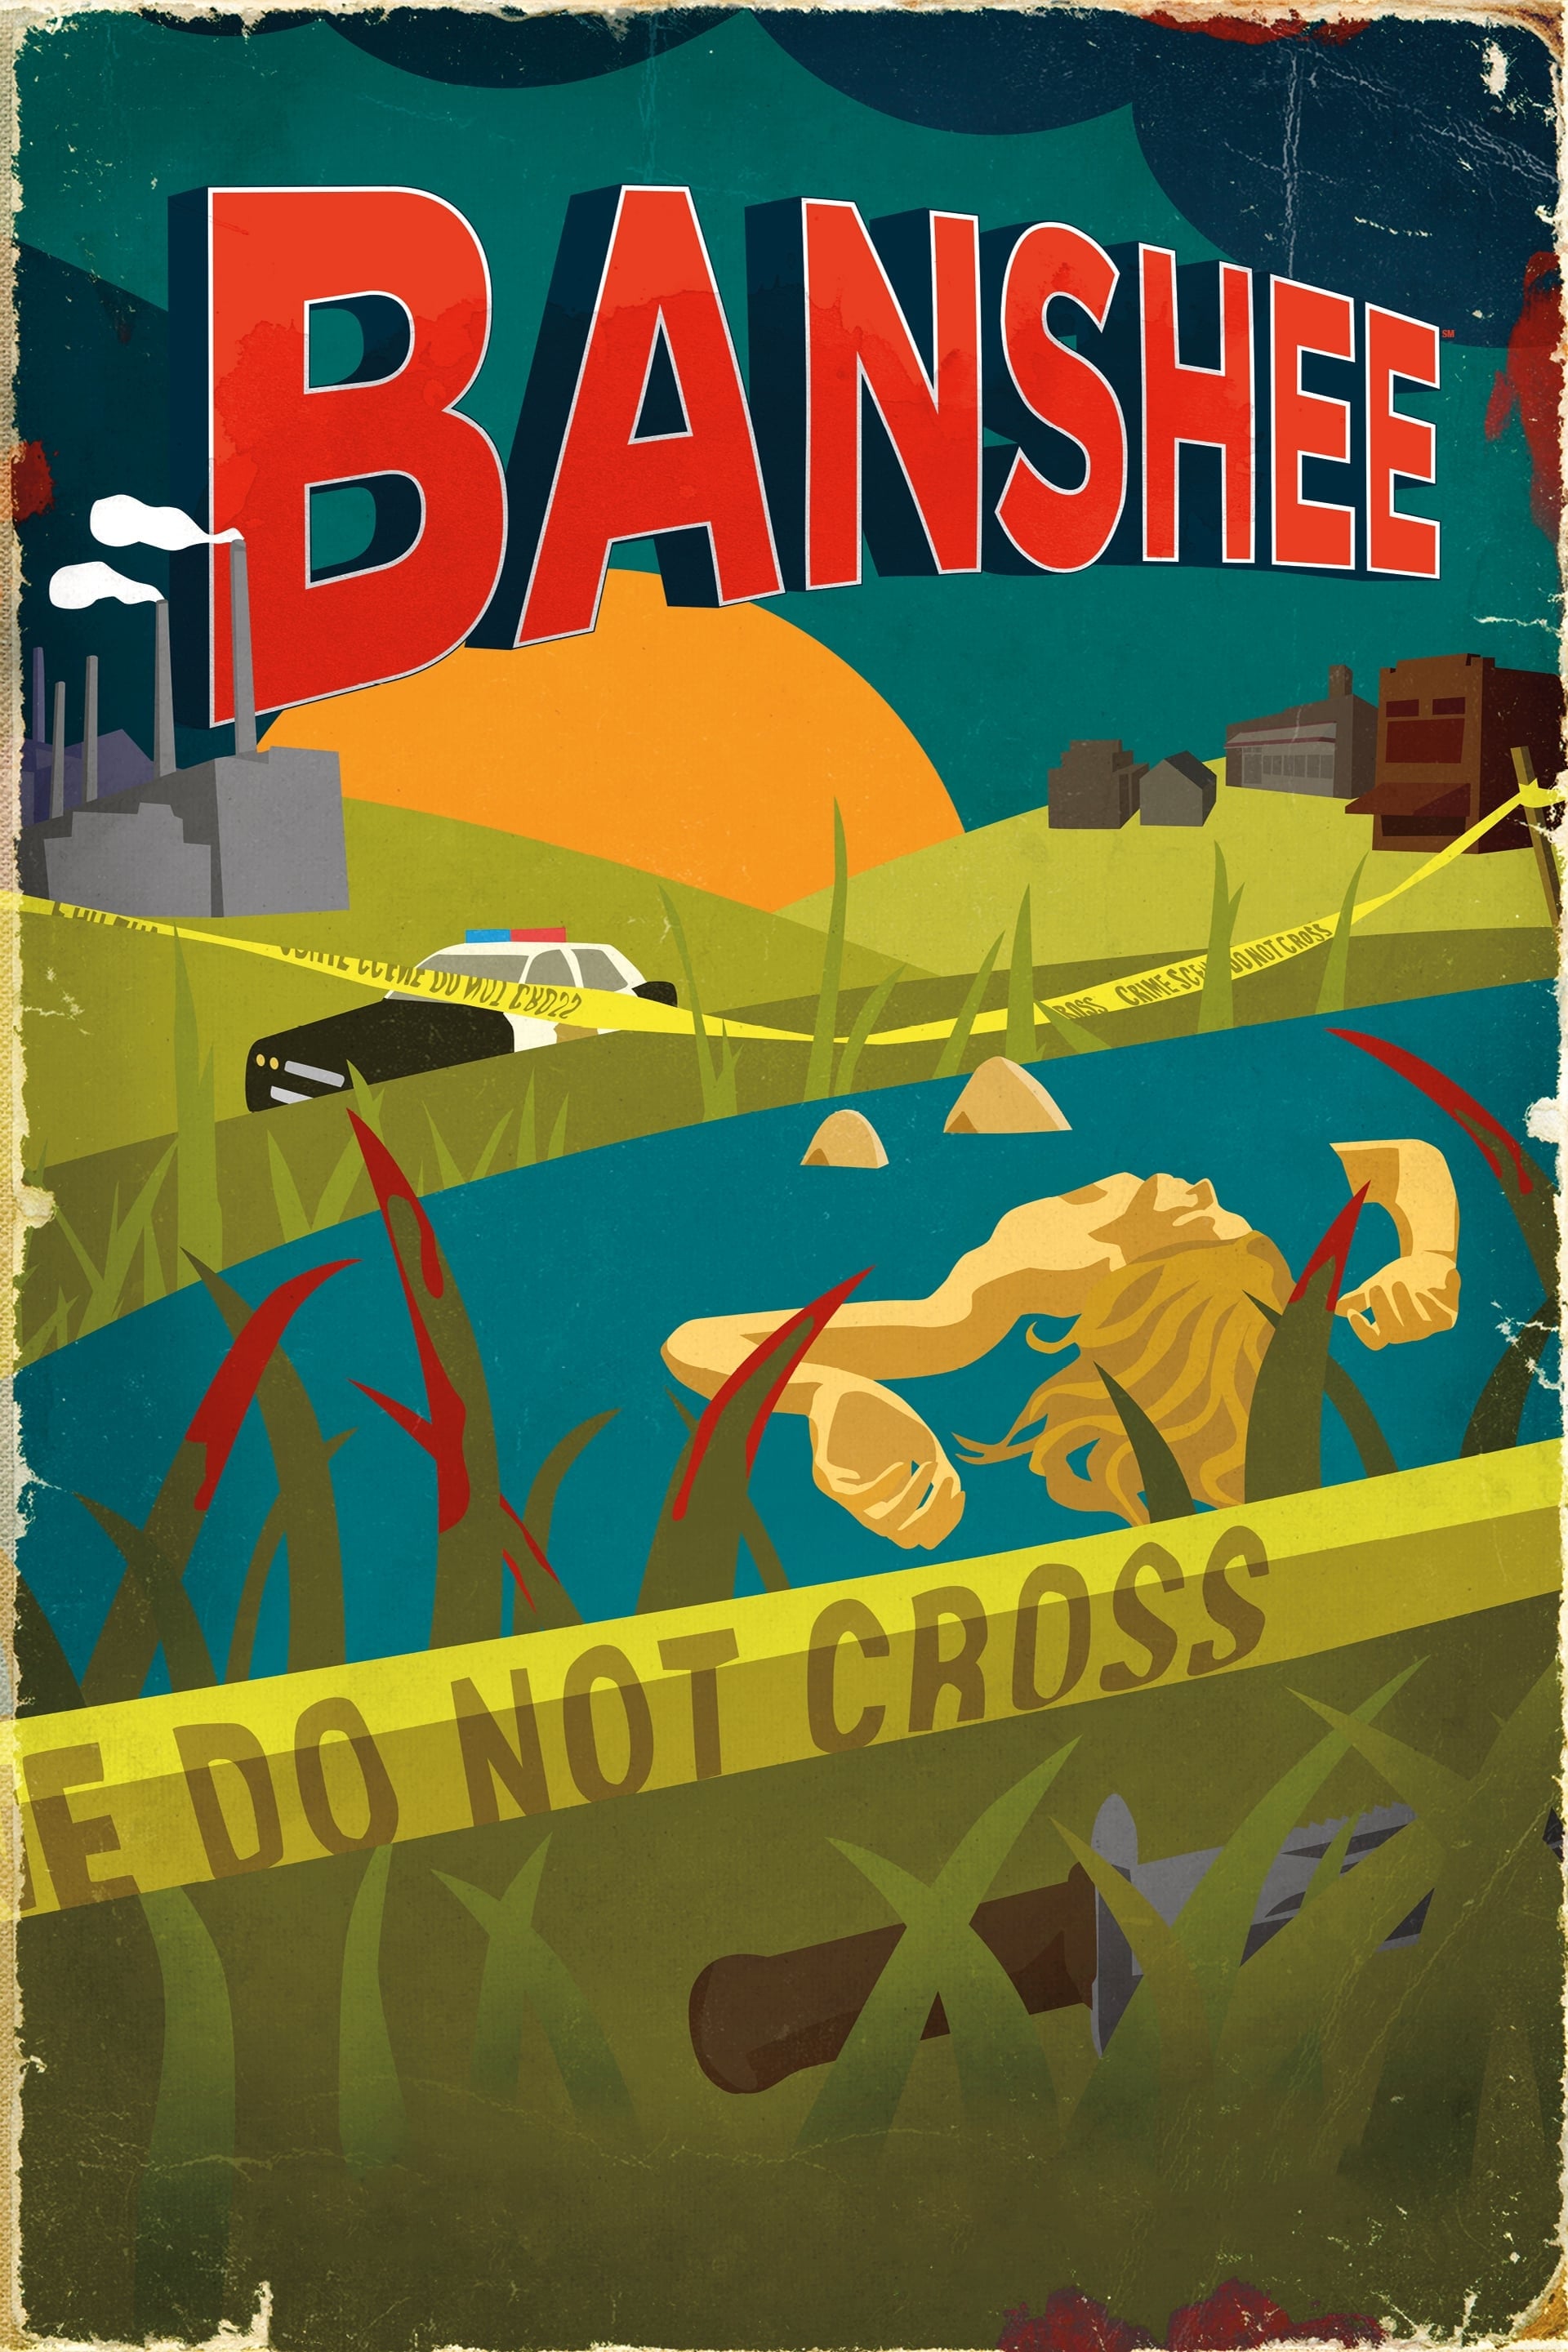 Phim Thị Trấn Banshee Phần 4 - Banshee Season 4 (2016)